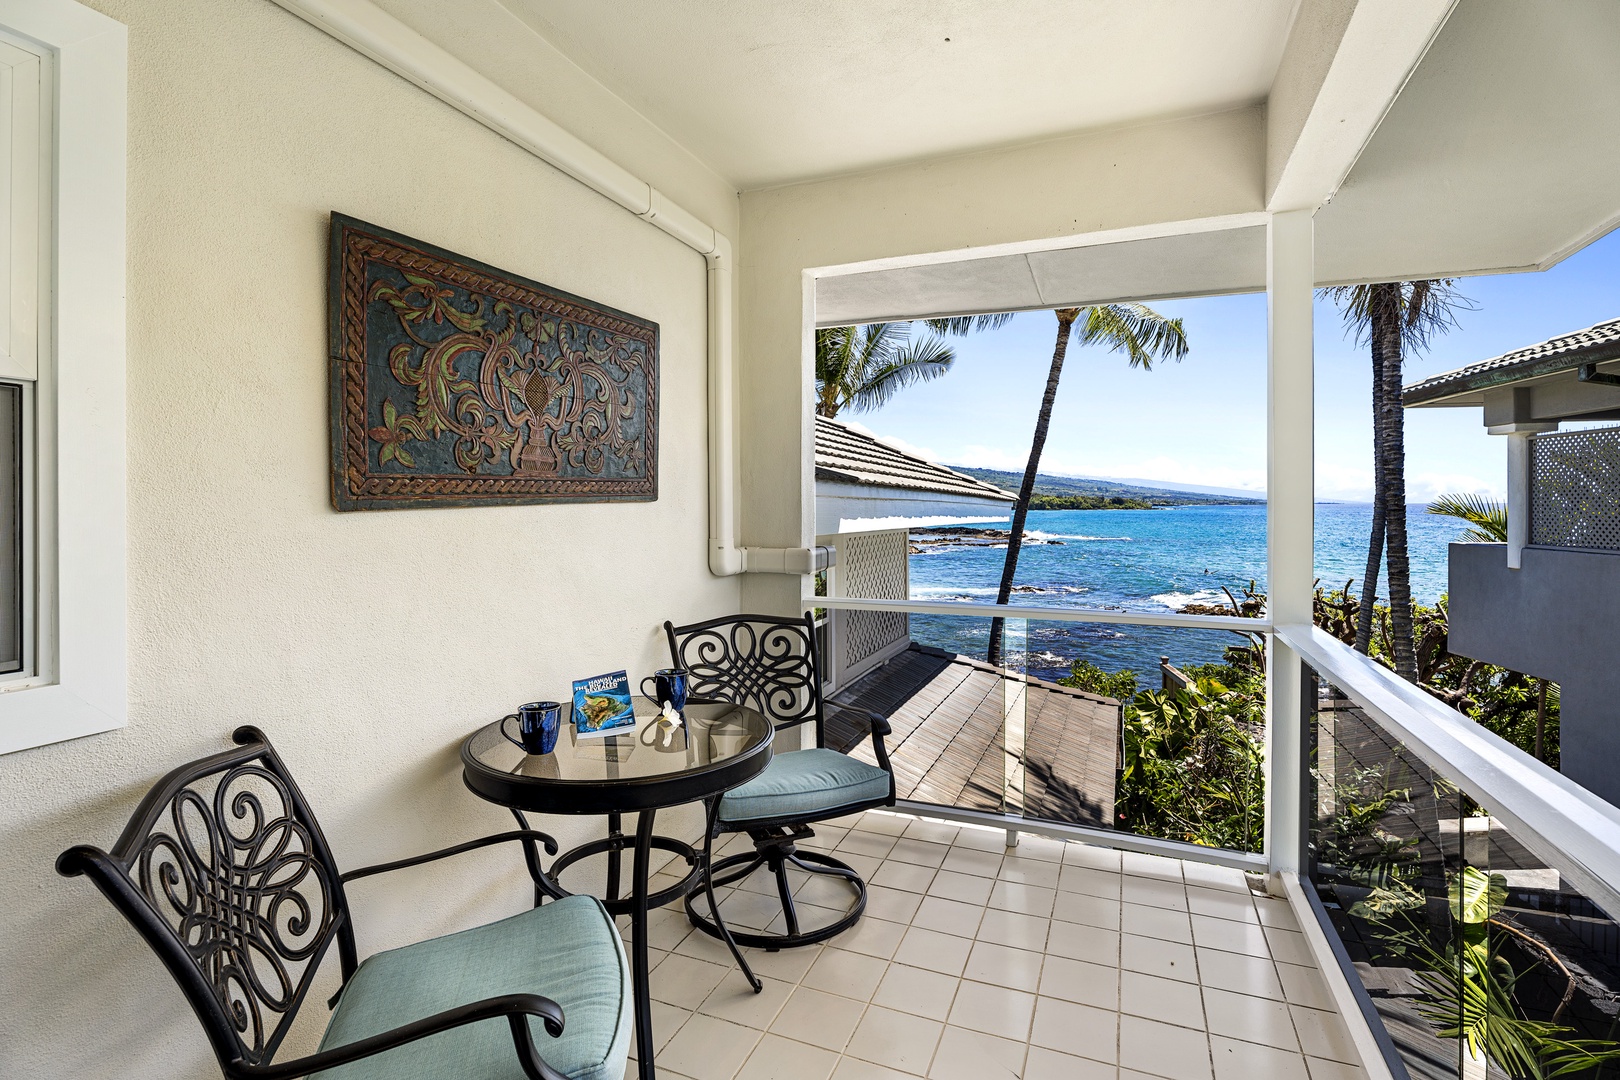 Kailua Kona Vacation Rentals, Ali'i Point #7 - Guest Bedroom also has a spectacular lanai